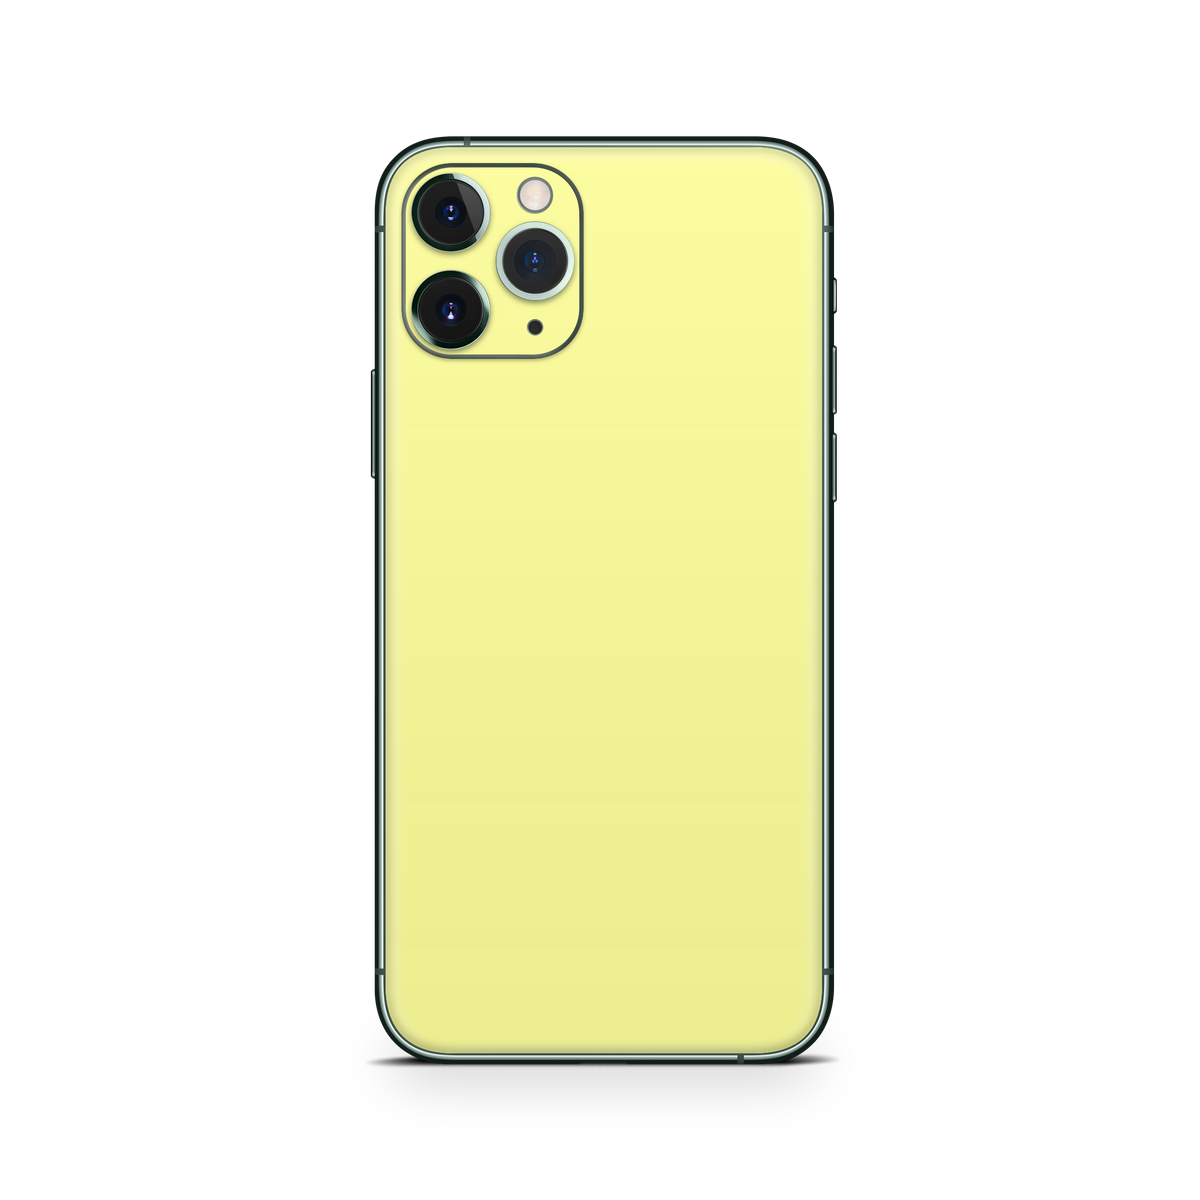 Apple iPhone 11 Pro Pale Yellow Skin